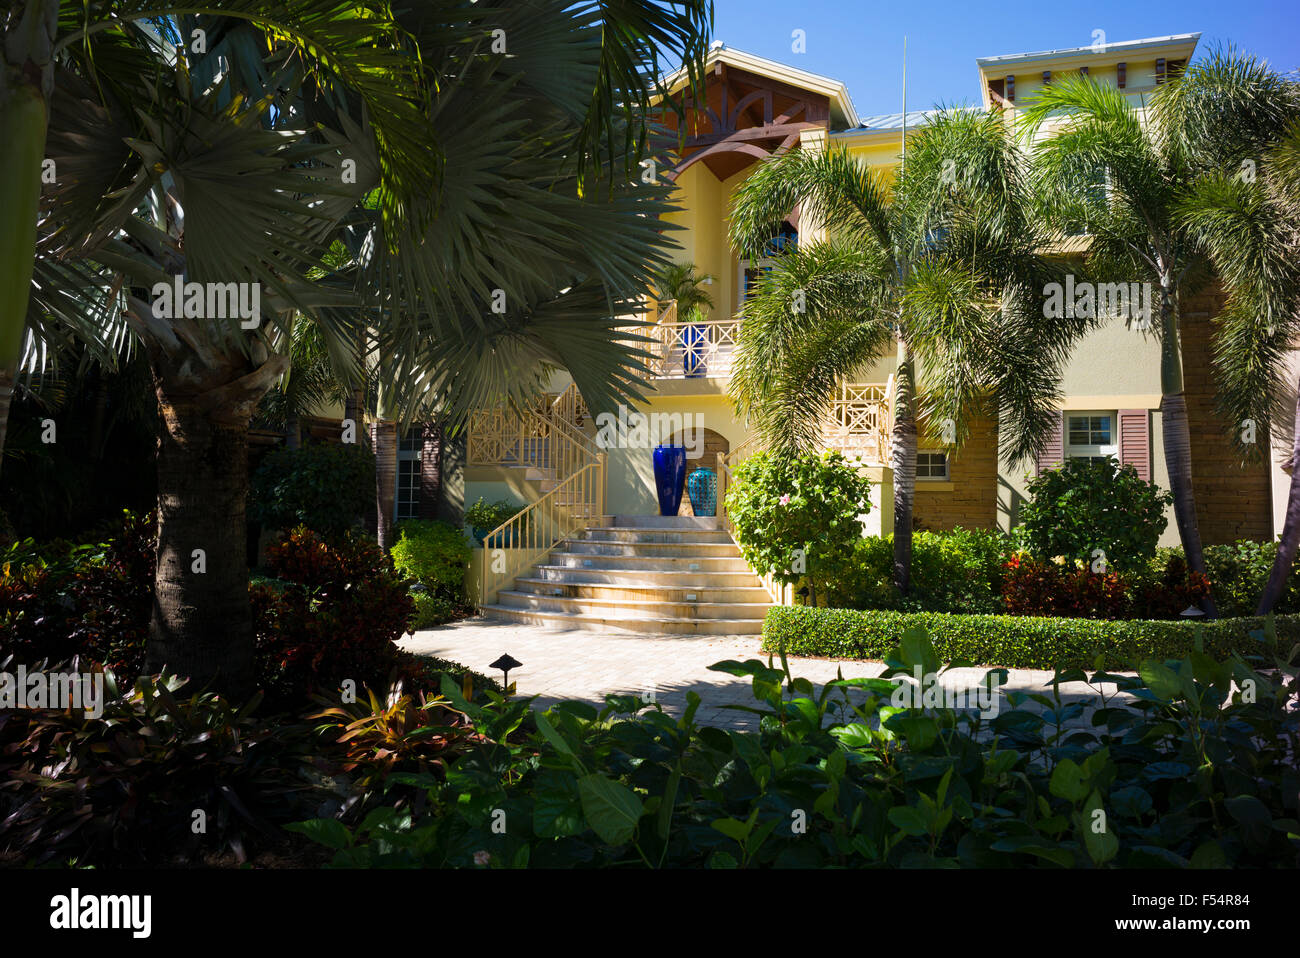 Luxury, stylish, winter home with sundeck and palm trees on Captiva Island in Florida, USA Stock Photo